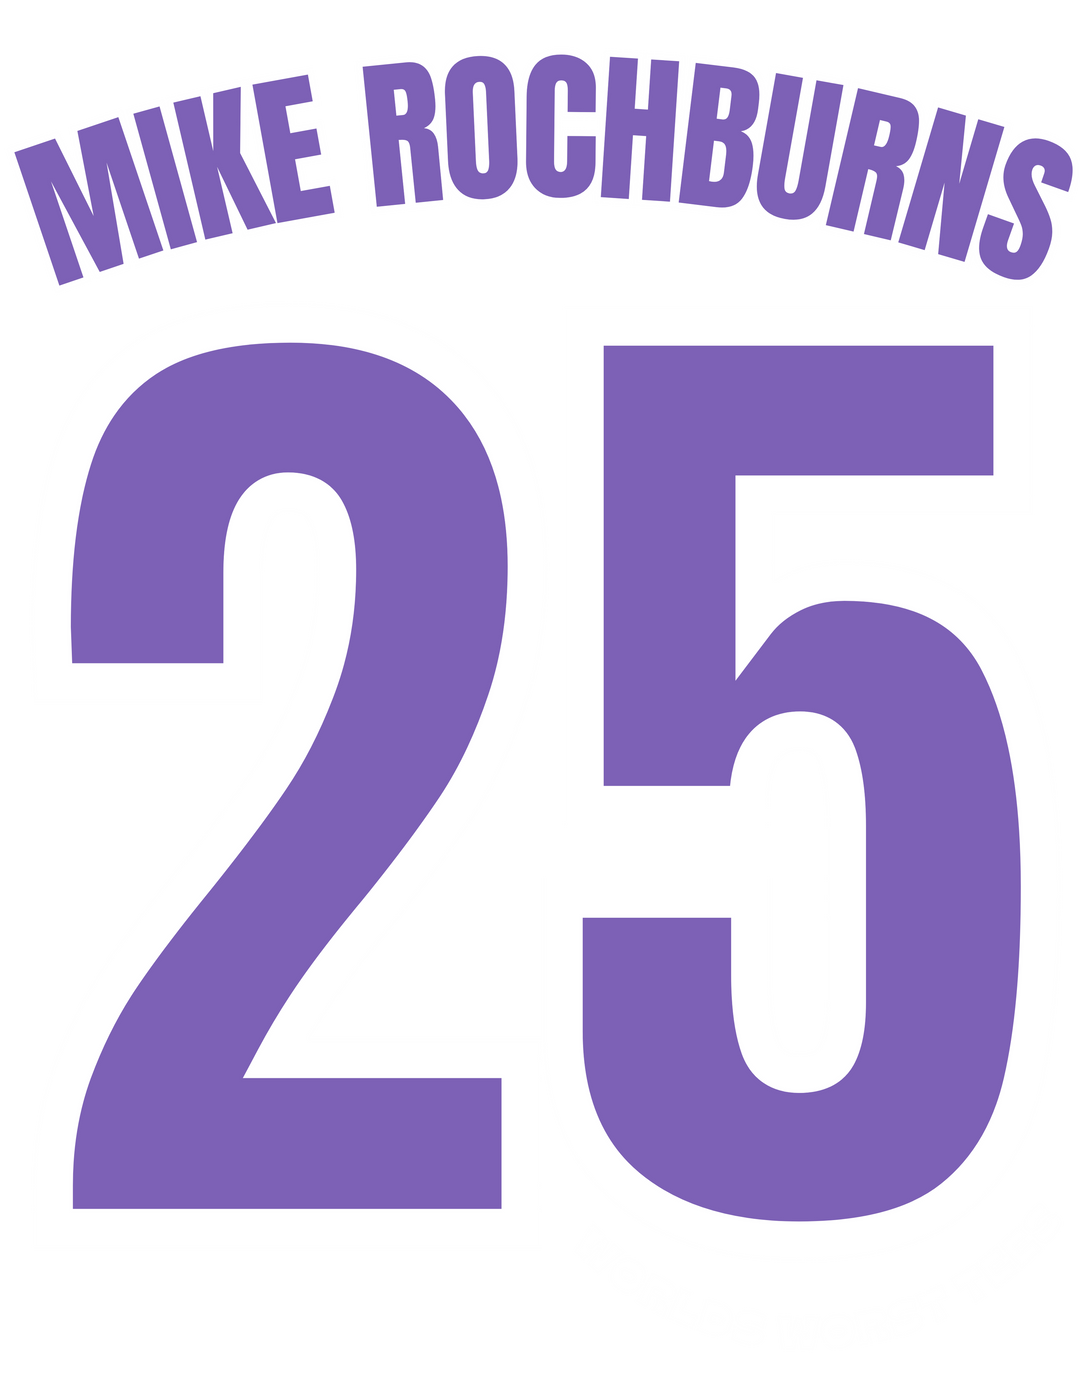 Colorado Rockhards #25 Mike Rotchburns Tee